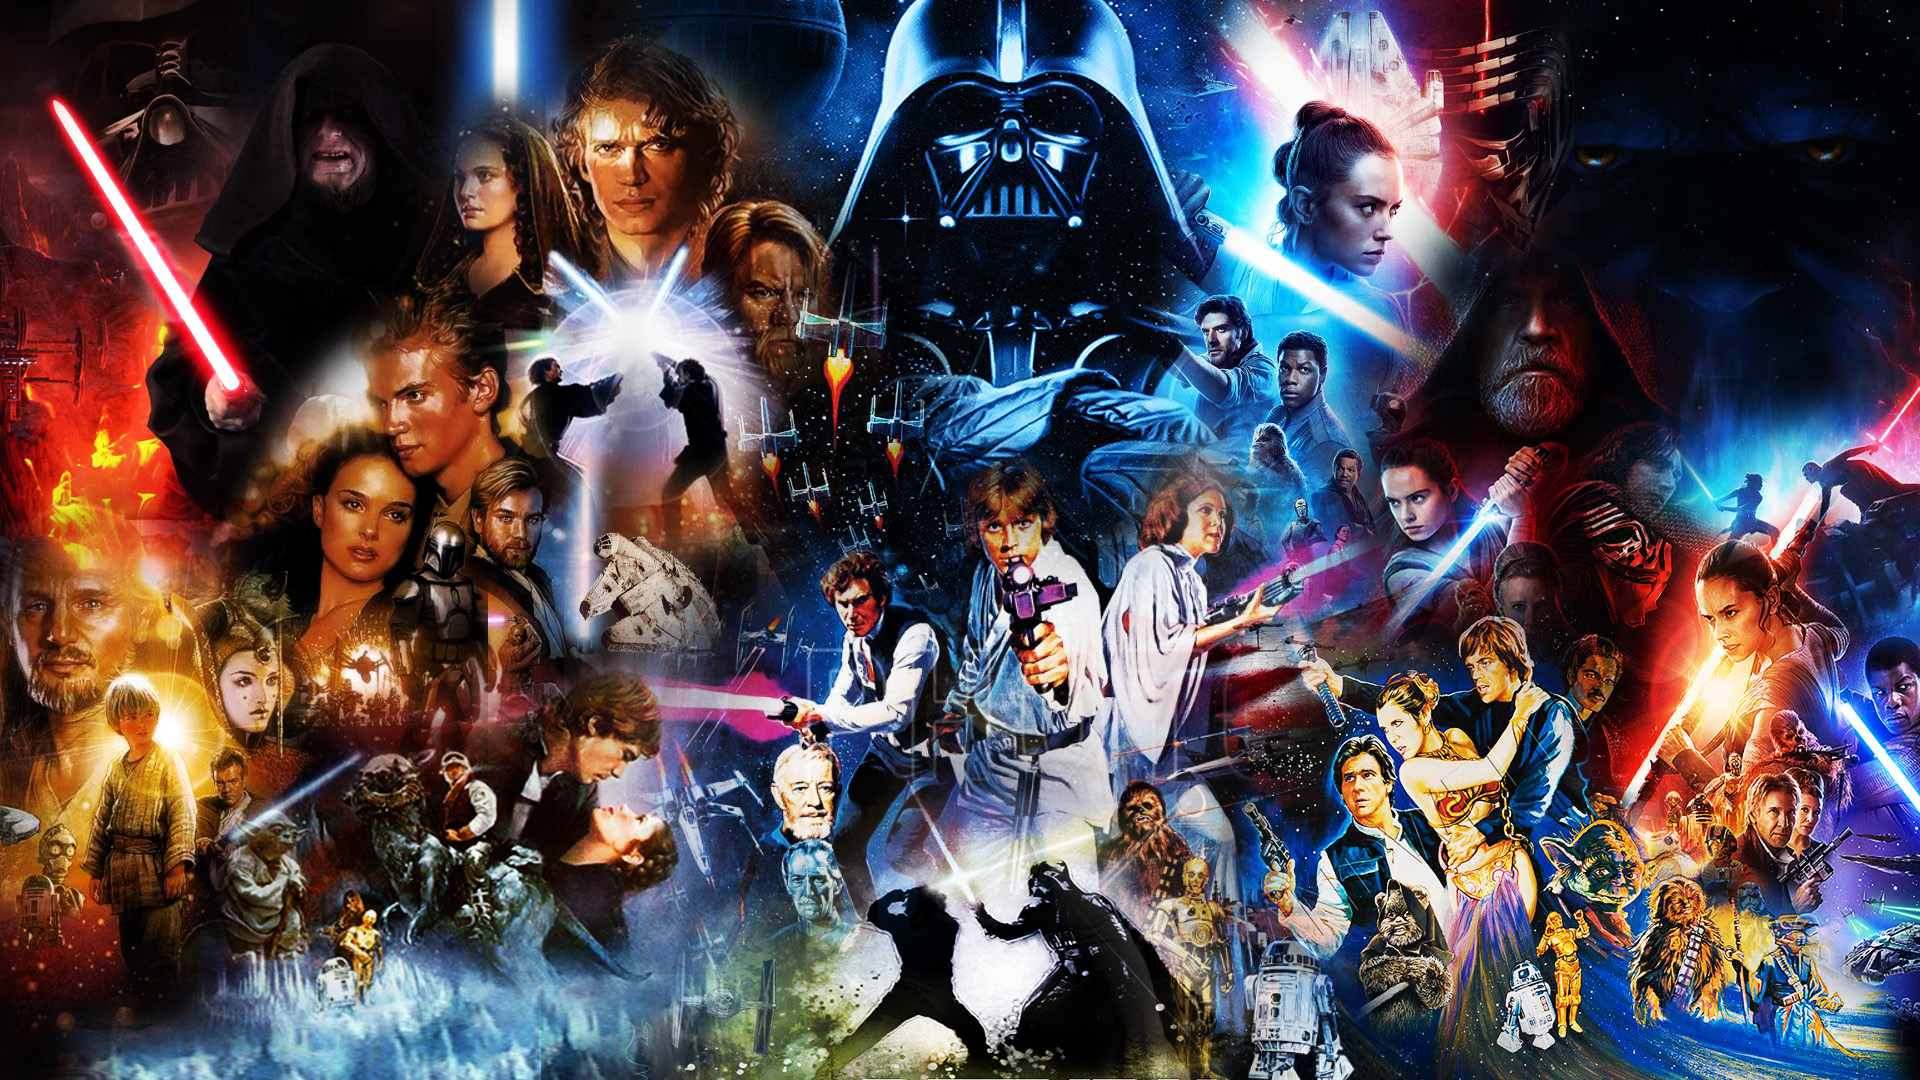 Star wars skywalker saga wallpaper by thekingblader on